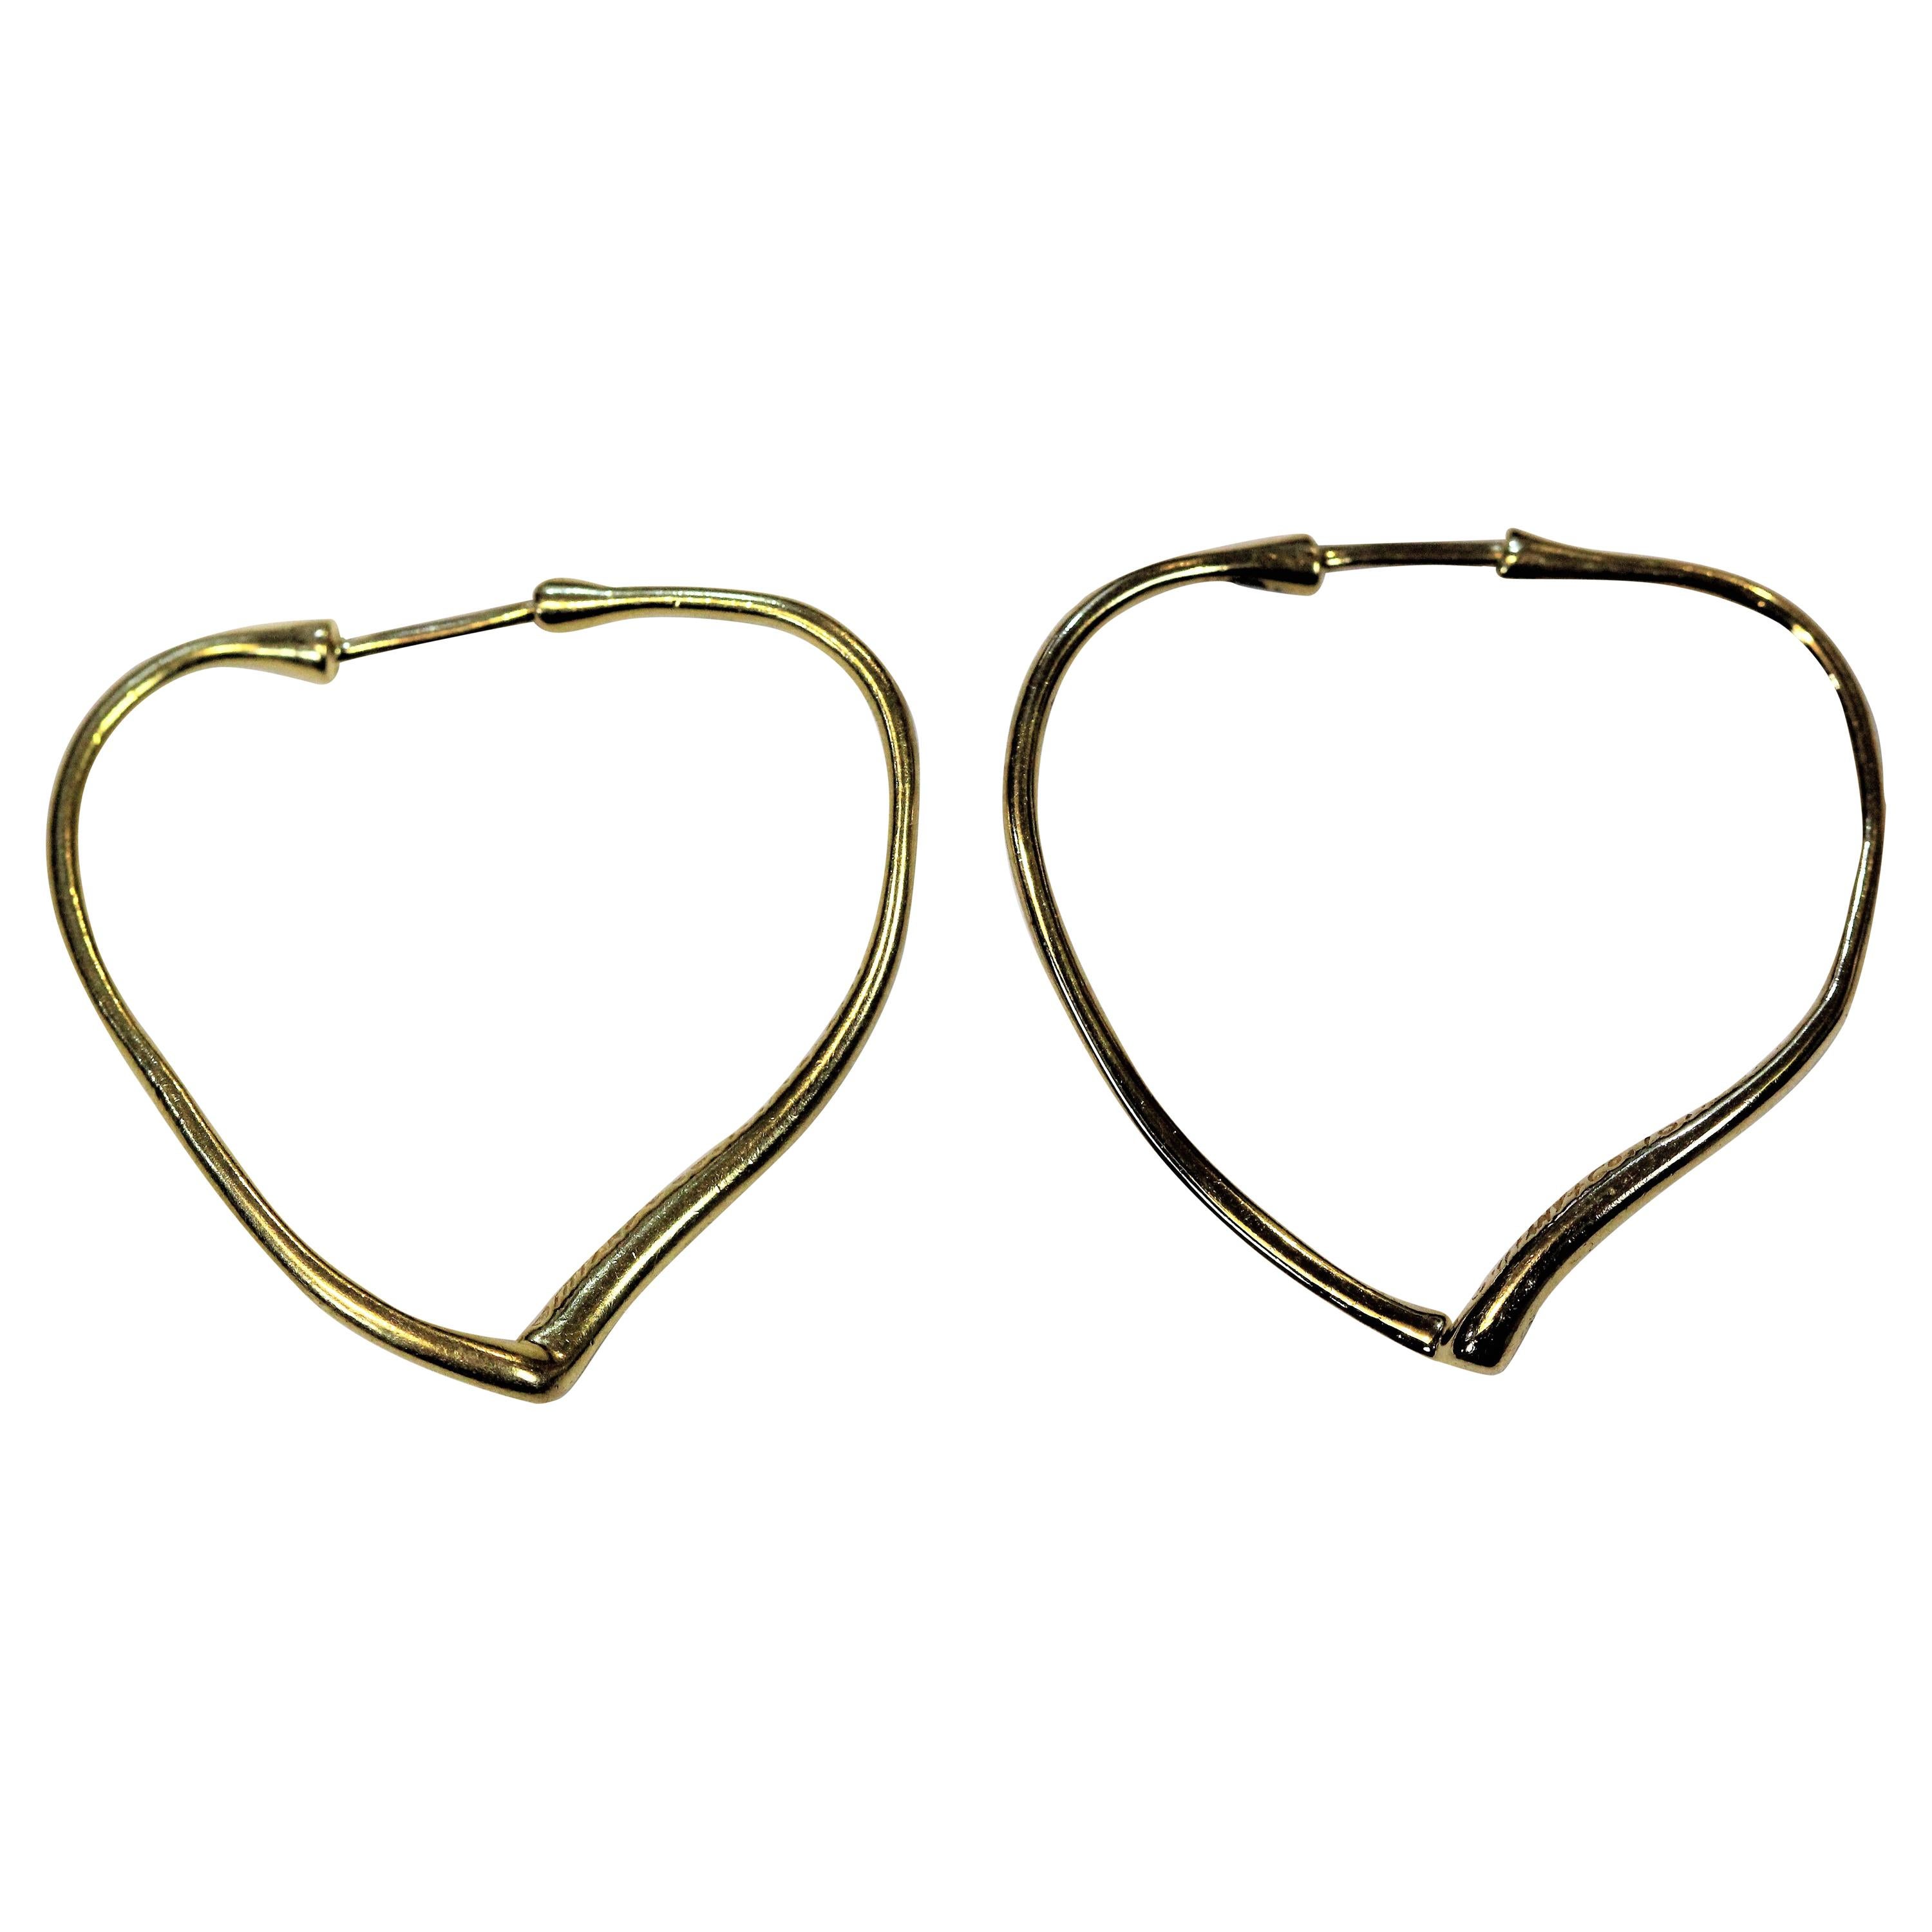 Tiffany & Co. Heart Shape Earrings by Peretti, circa 1980s